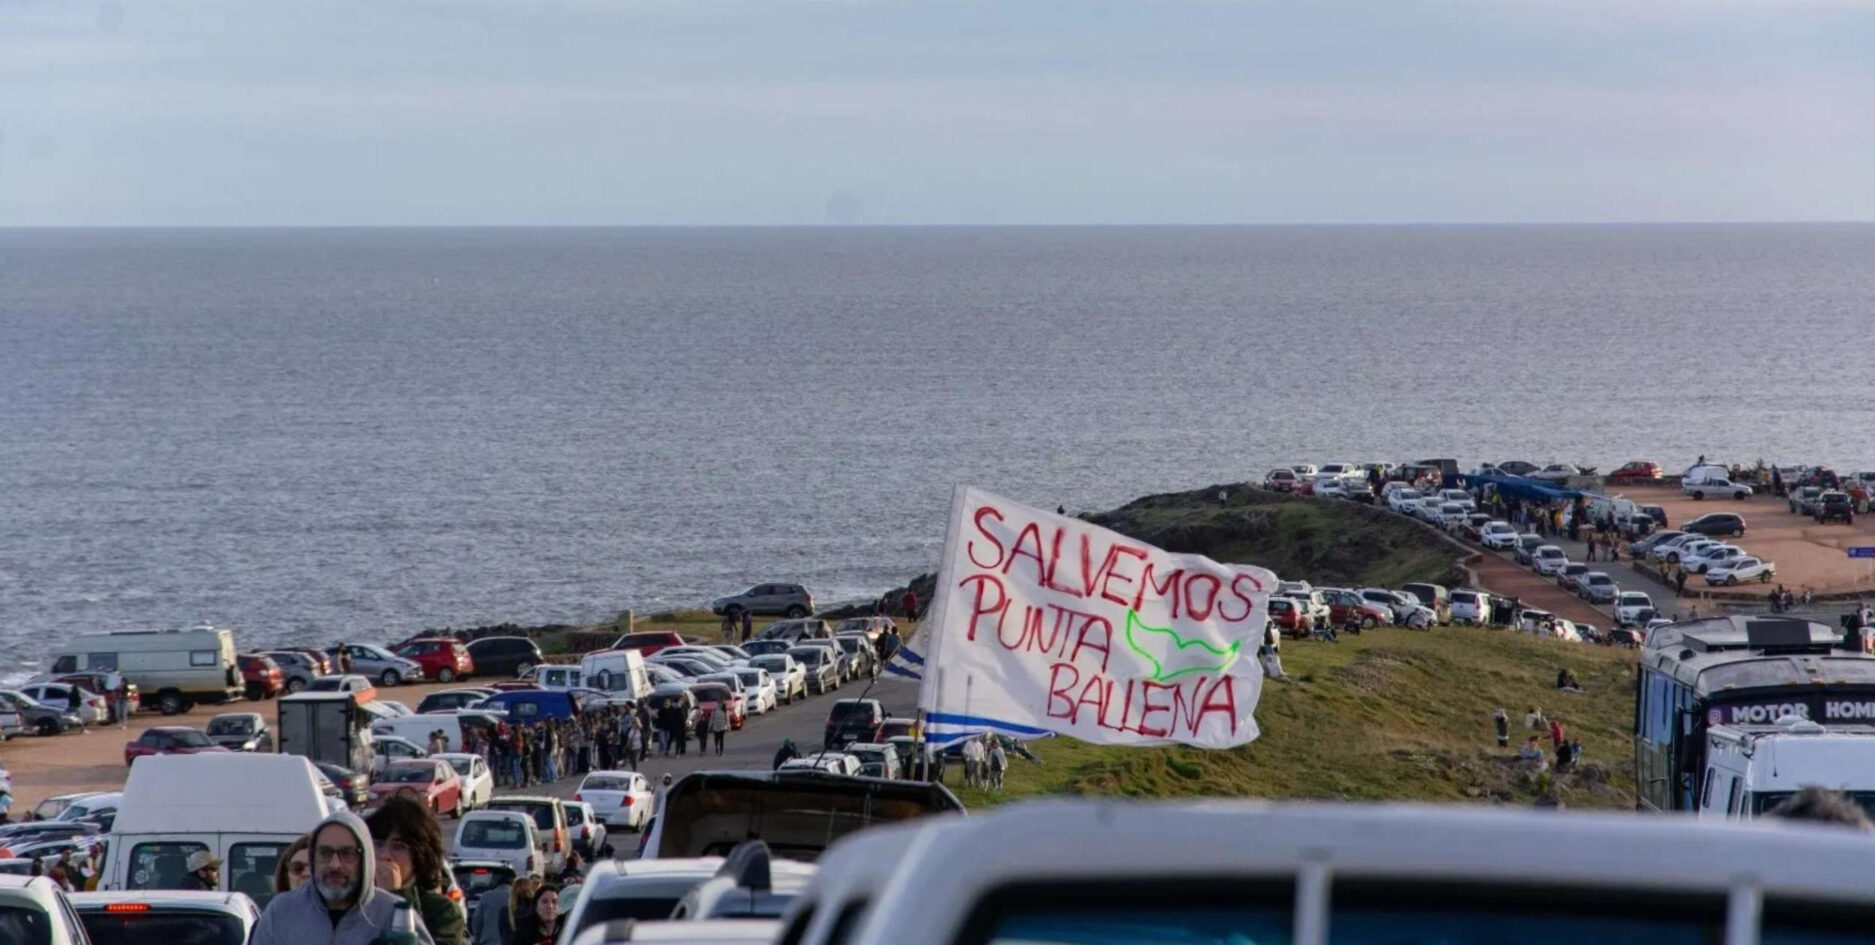 Punta Ballena demonstrations